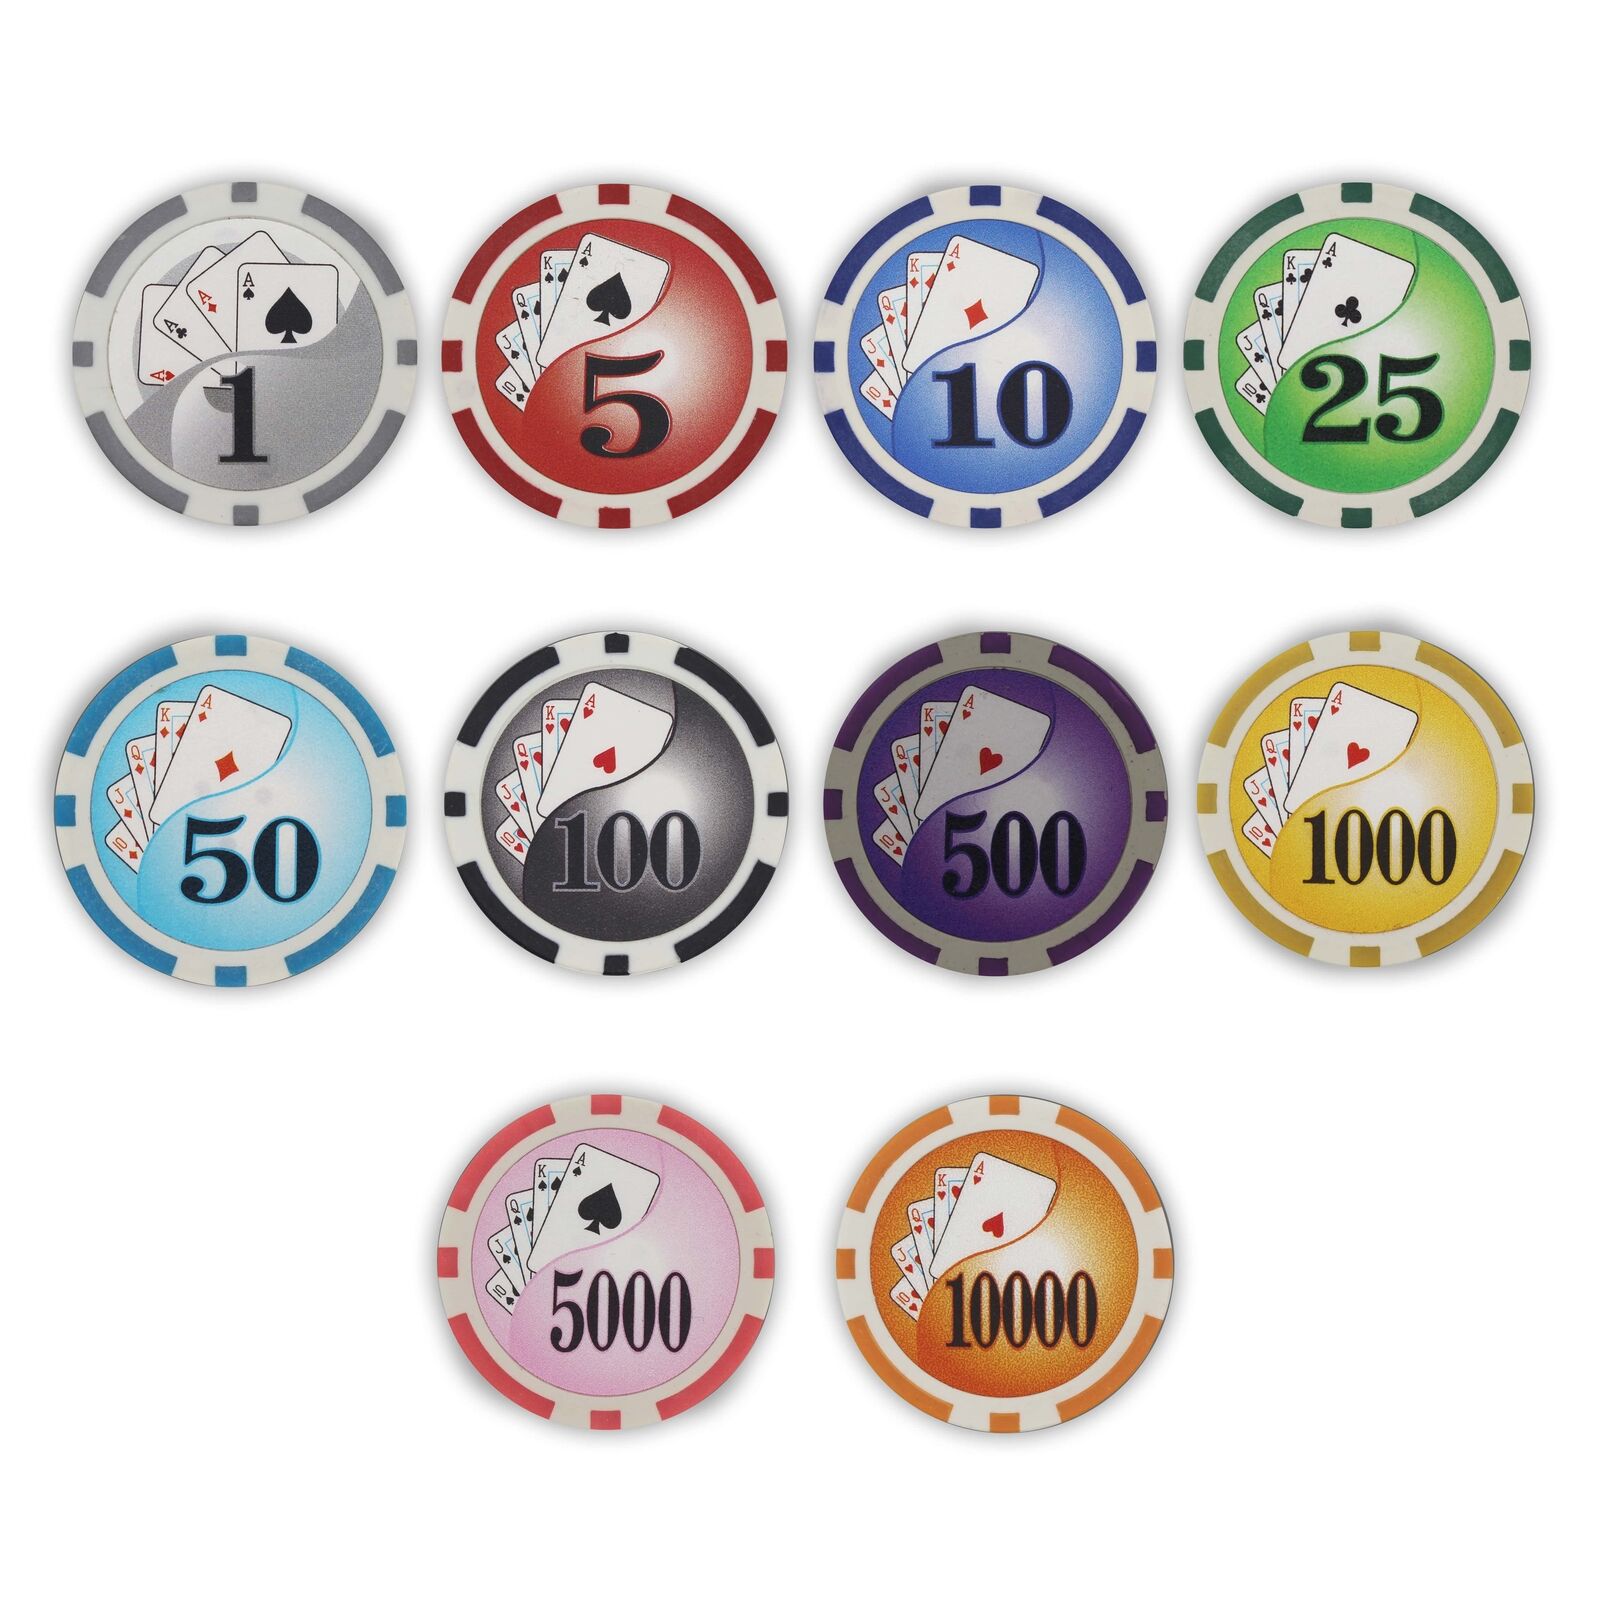 Bulk 500 Yin Yang Poker Chips 11.5 Gram 8 Stripe - Pick Your Denominations